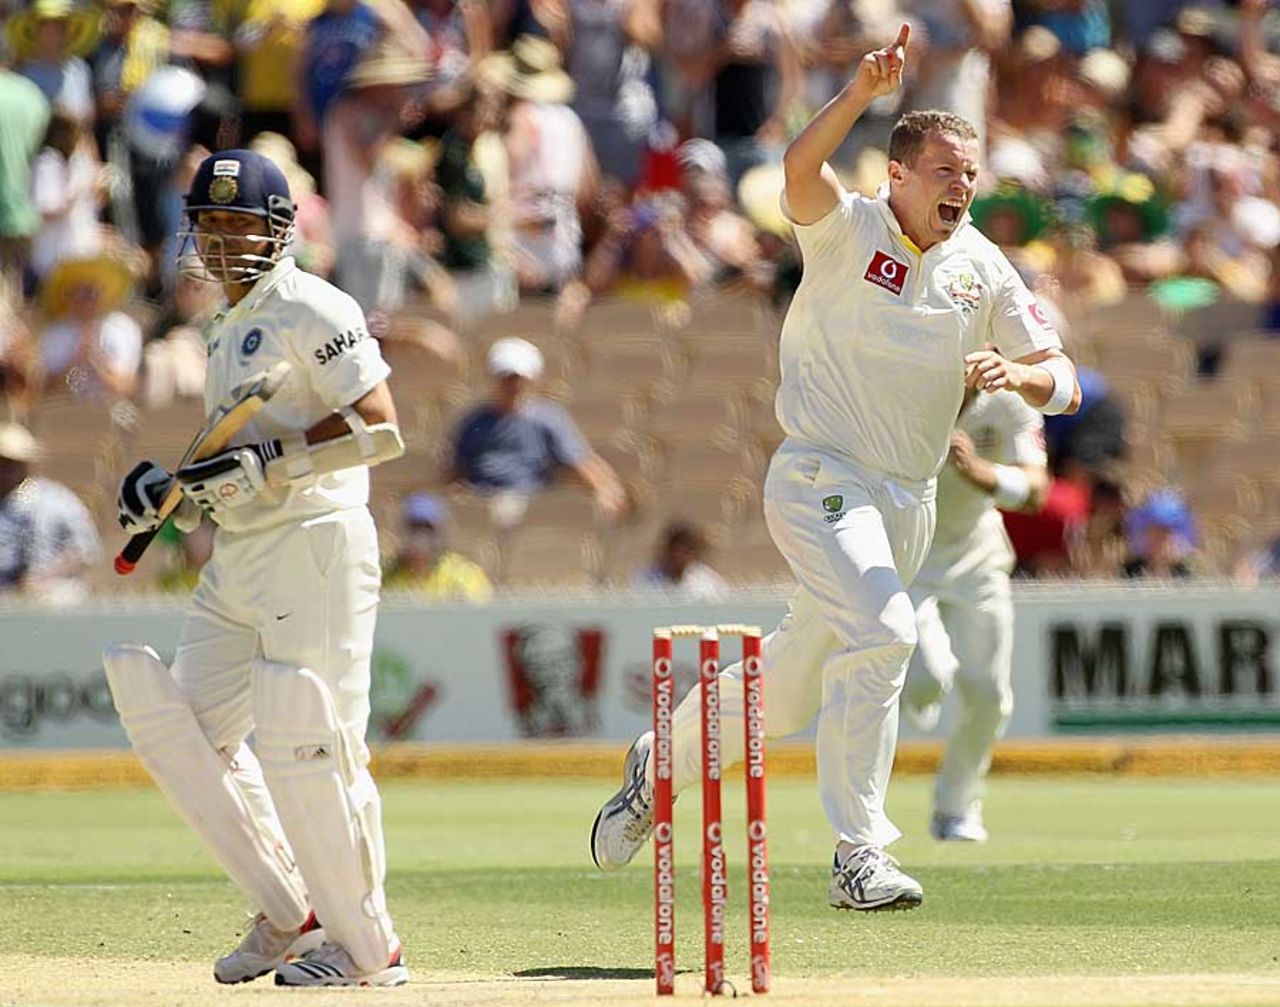 Peter Siddle celebrates the fall of Sachin Tendulkar, Australia v India, 4th Test, Adelaide, 3rd day, January 26, 2012